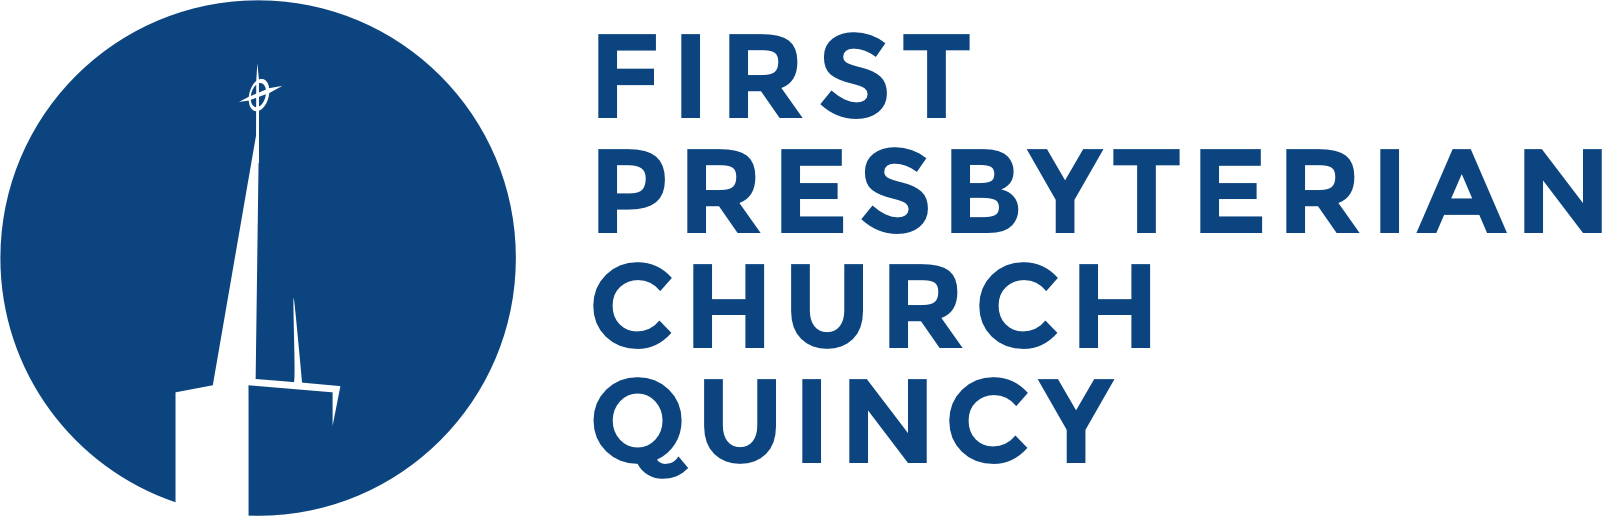 First Presbyterian Church Quincy